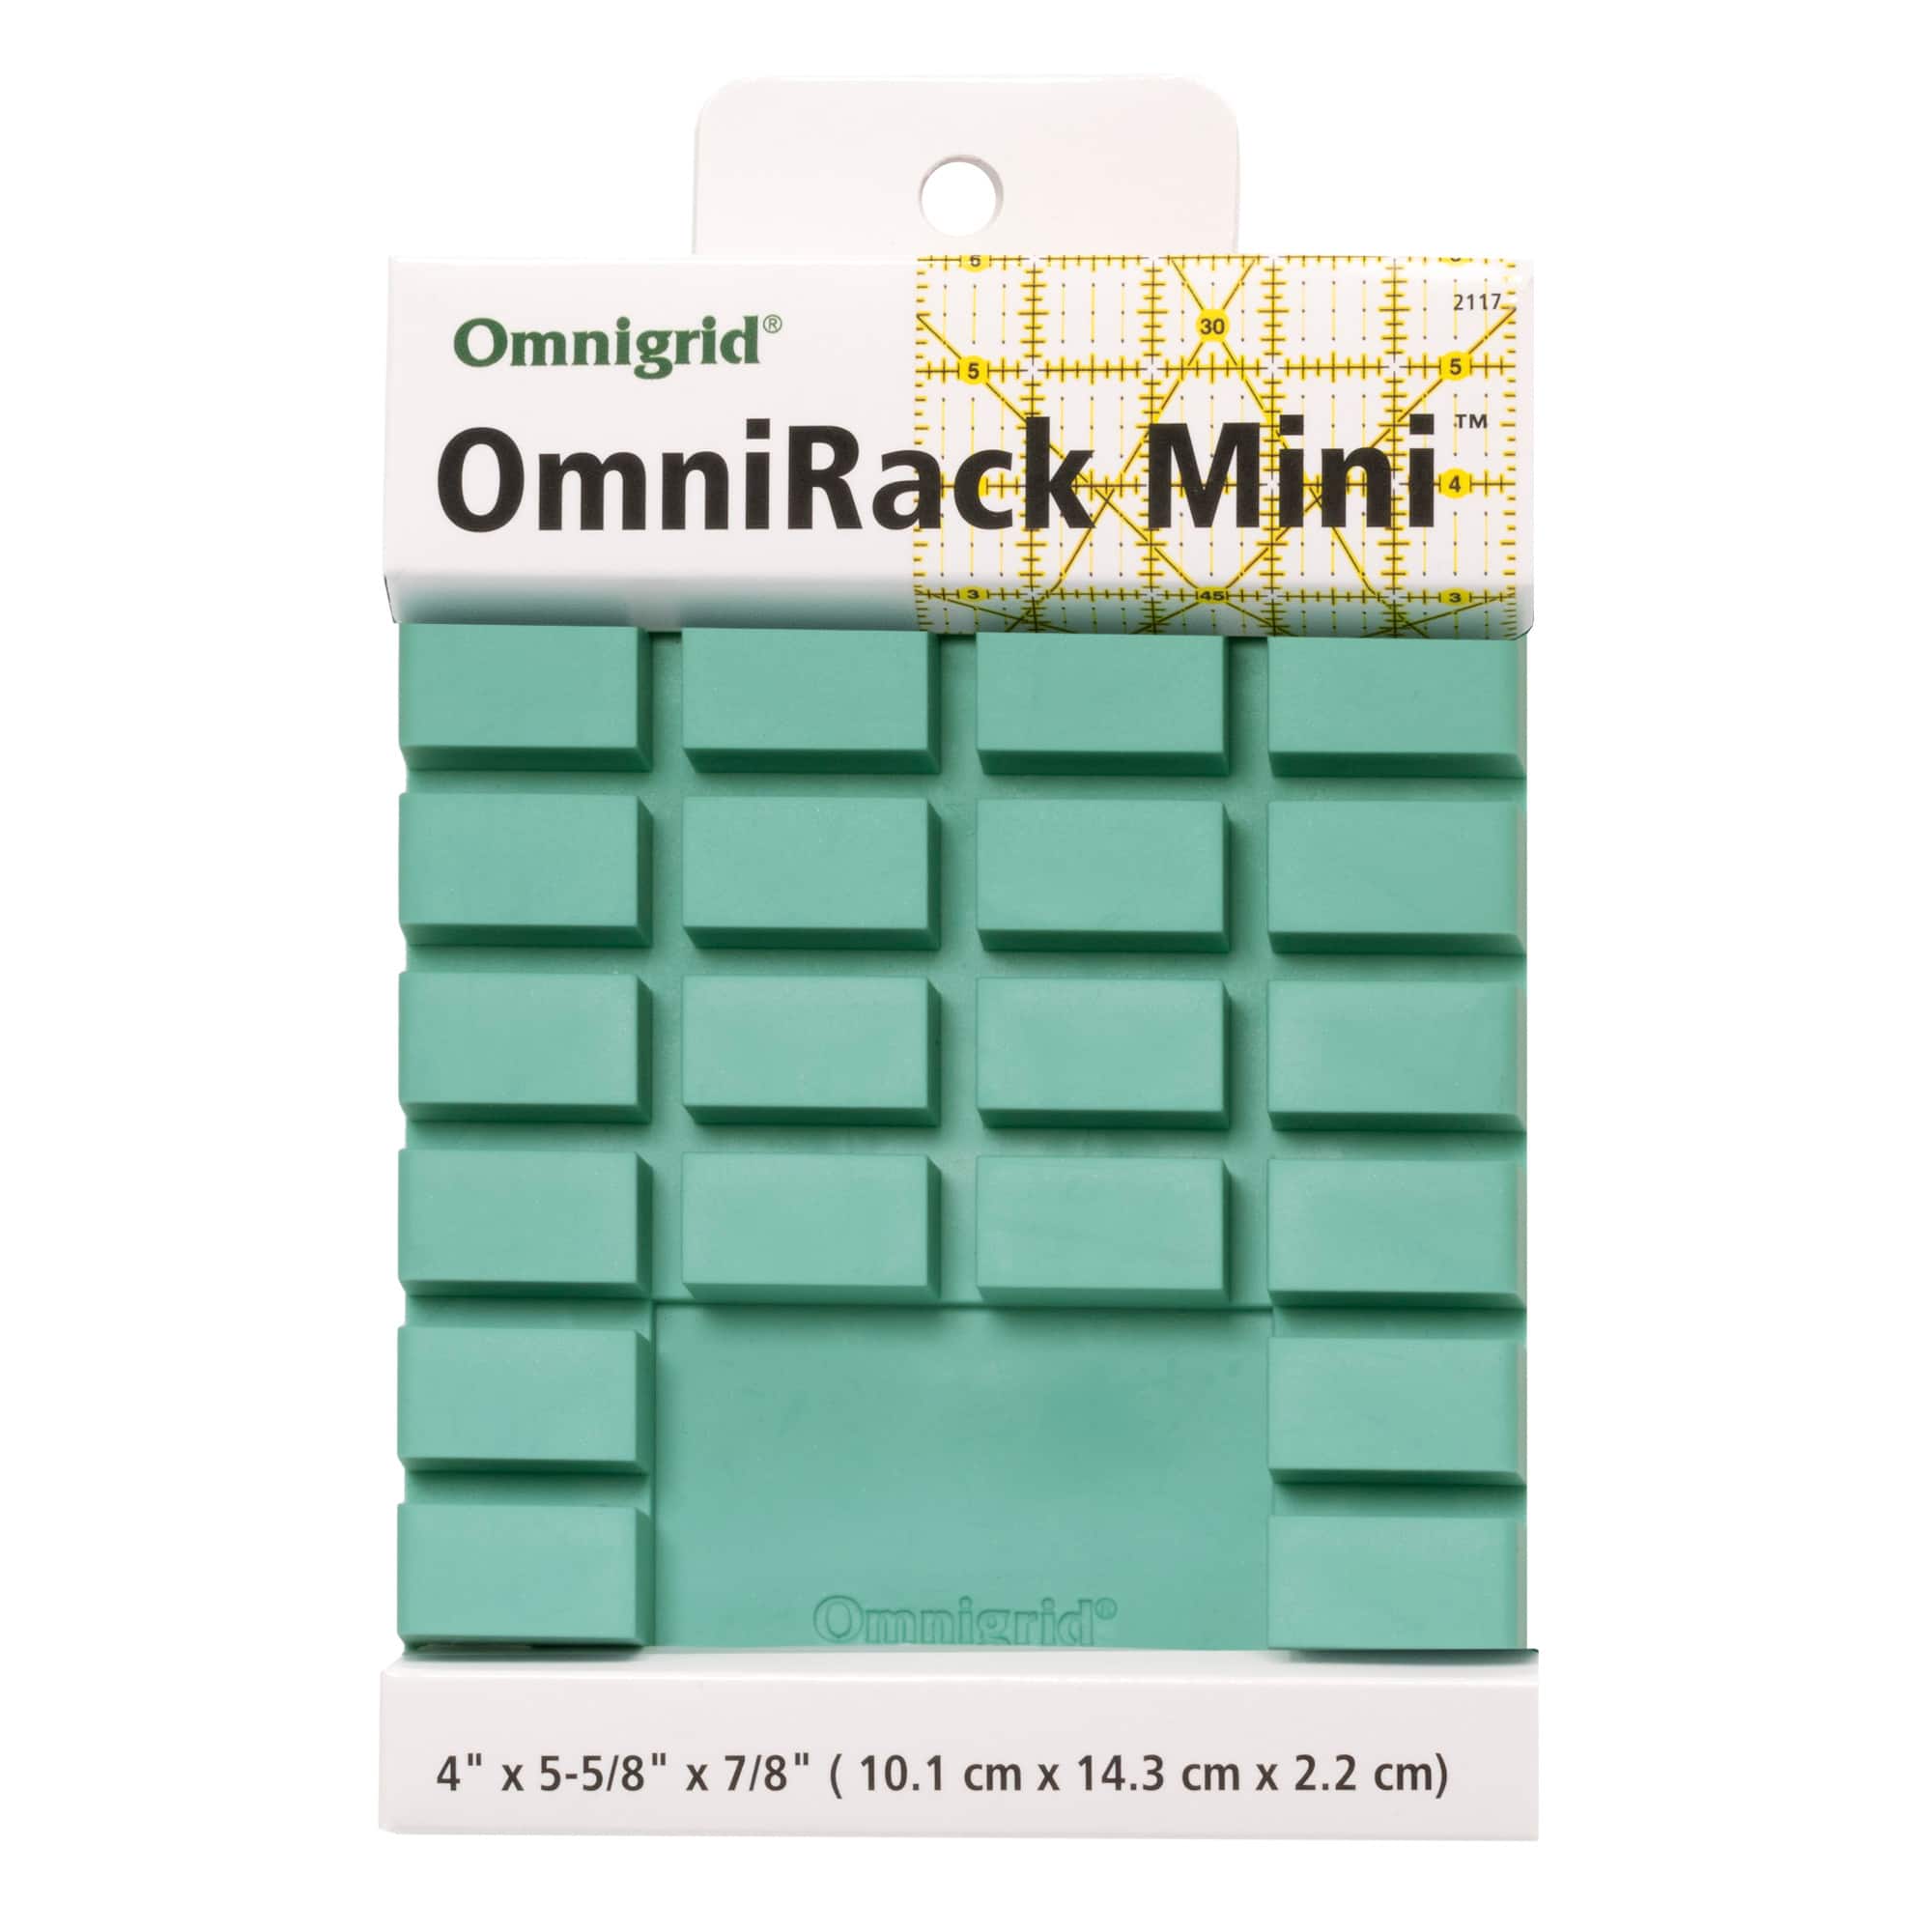 Omnigrid OmniRack Mini Ruler Storage